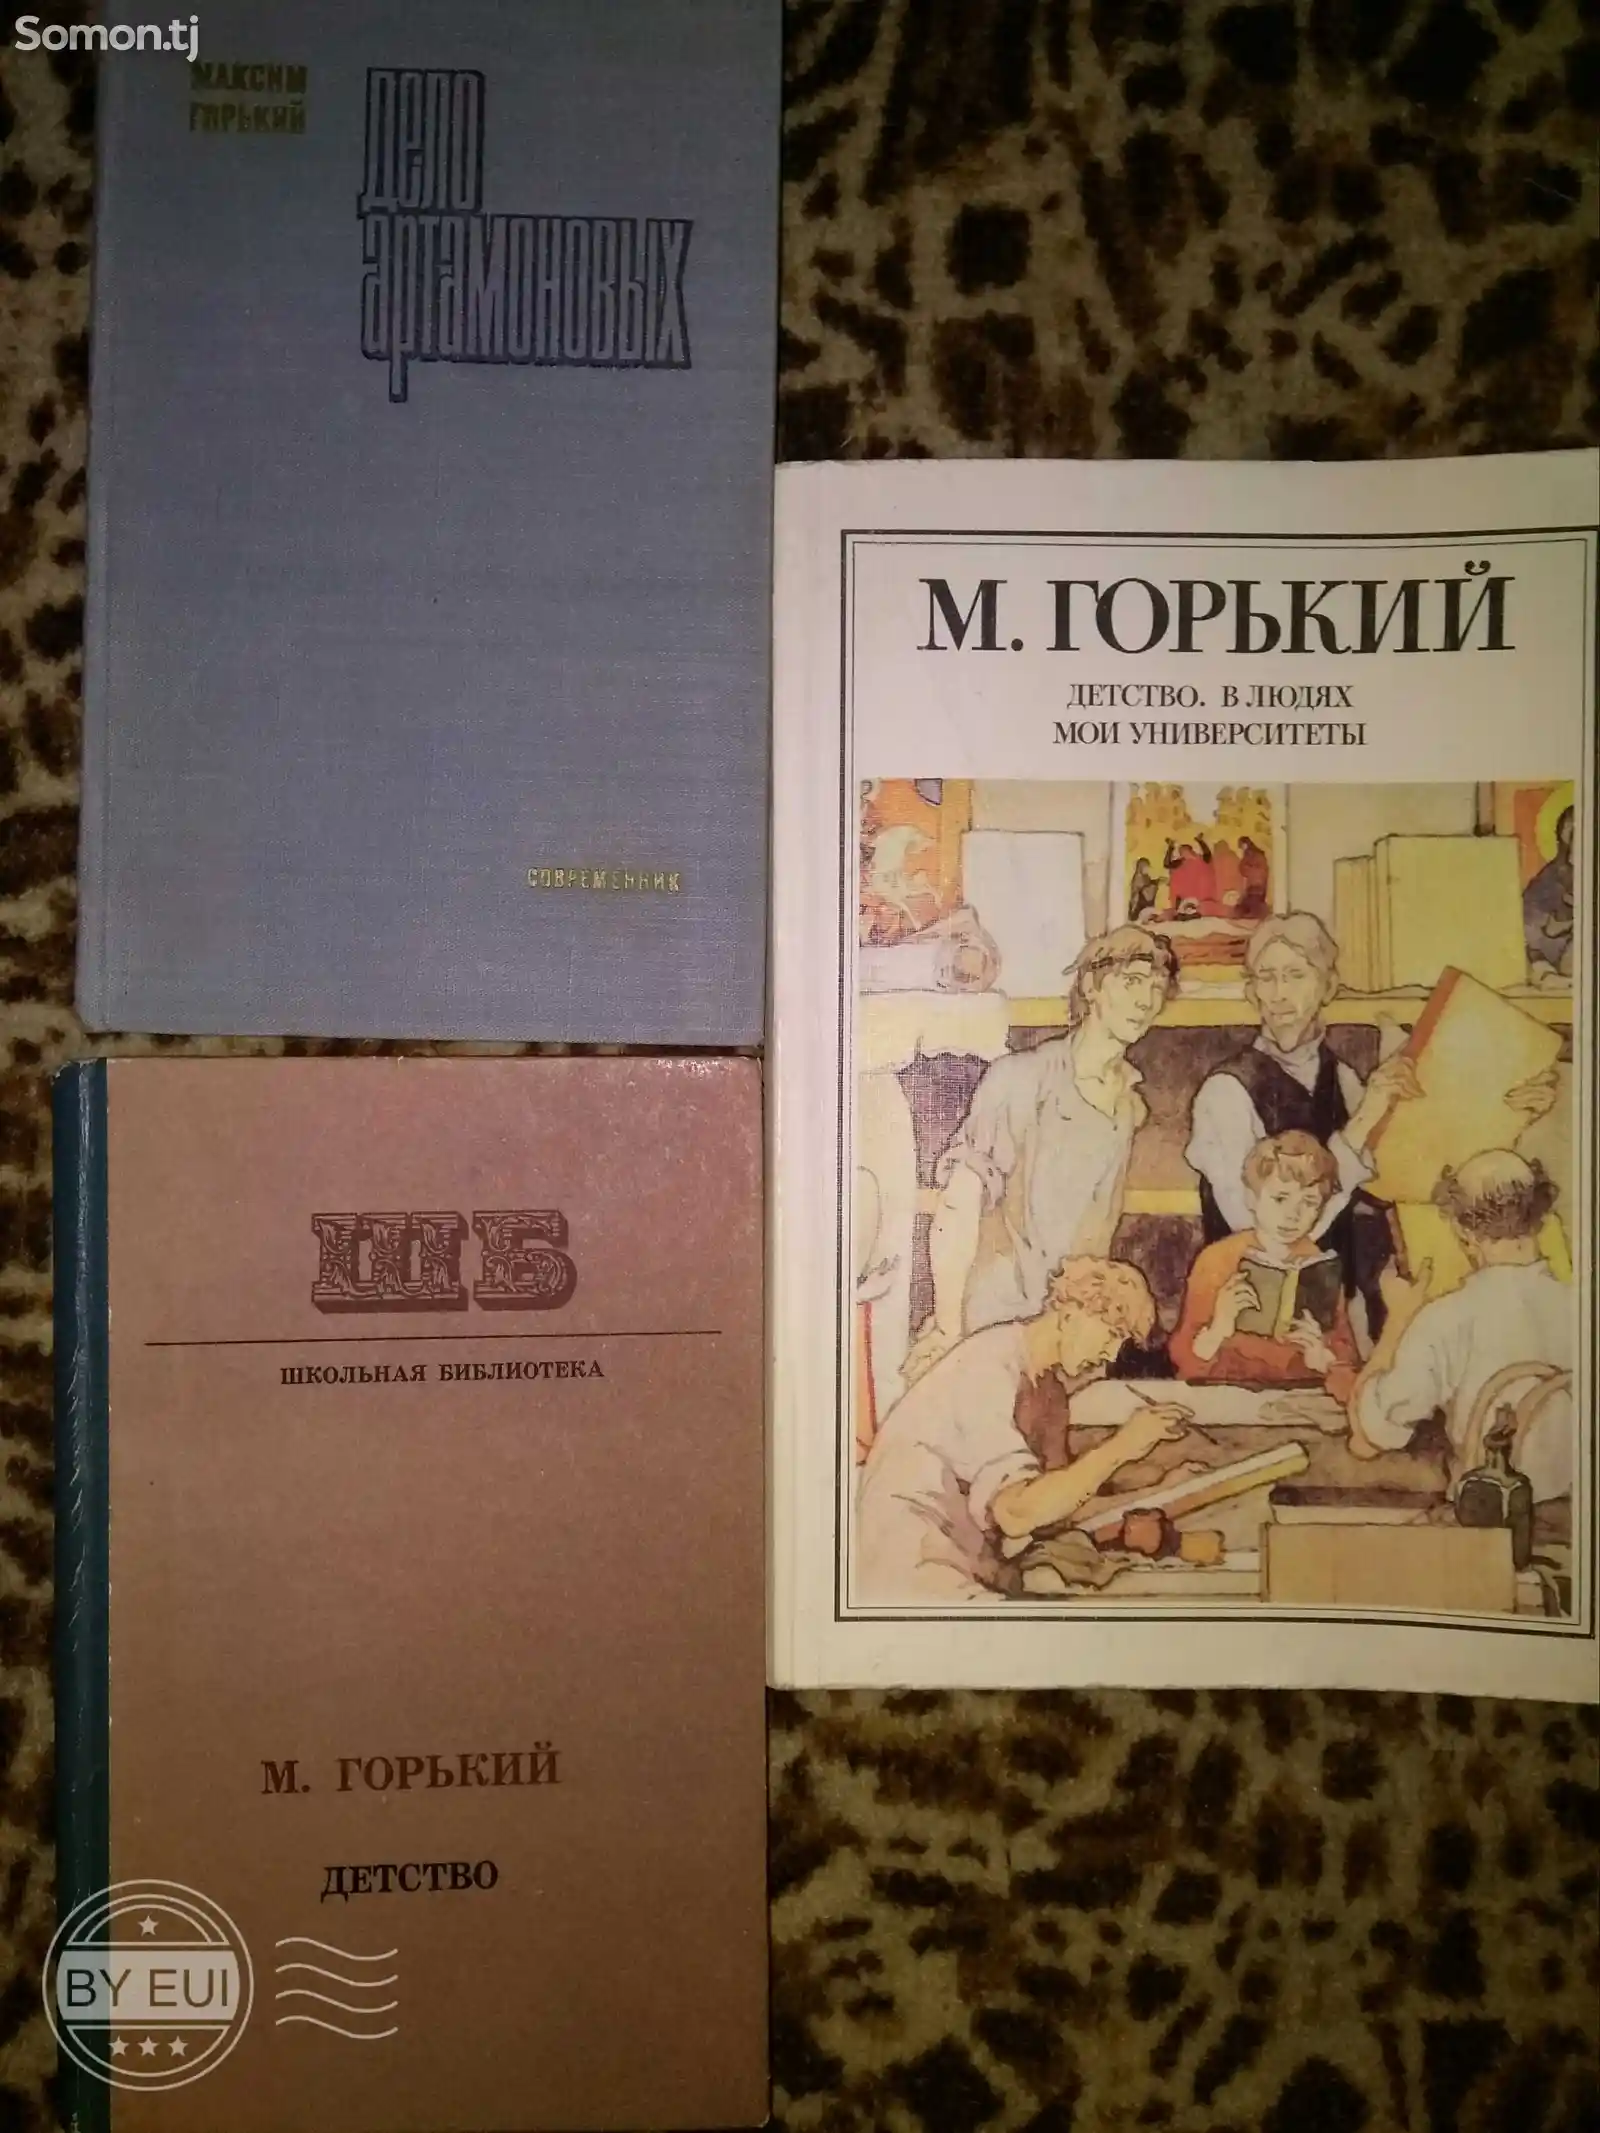 Книги М.Горького